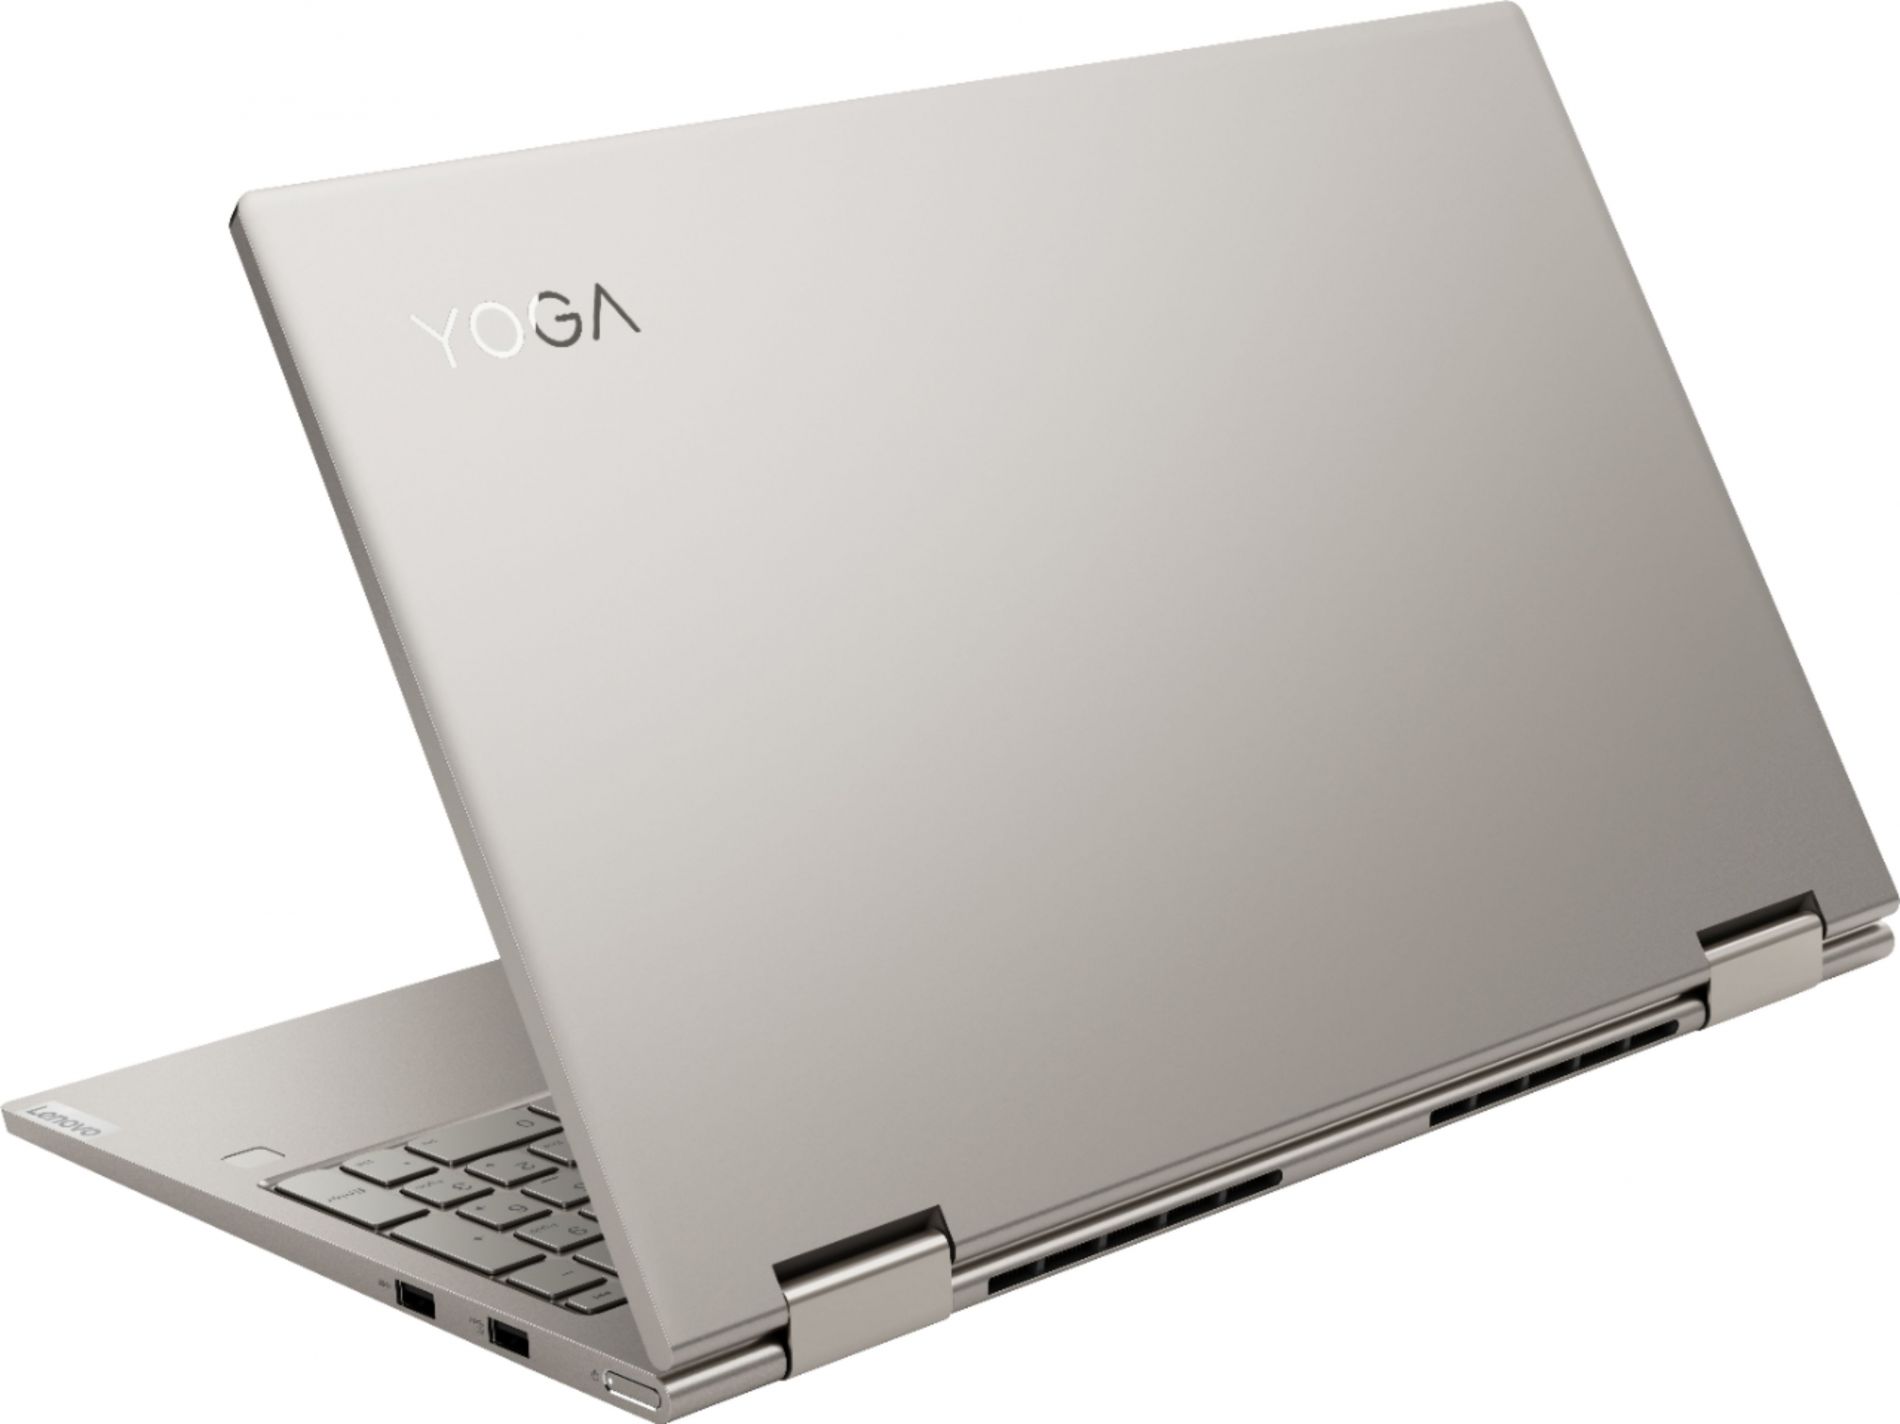 Laptop Lenovo Yoga c740-141ml convertible pantalla 14", intel core i5 10ma gen. Ram 8GB, D. Solido 256GB, Touch Screen, Windows 10